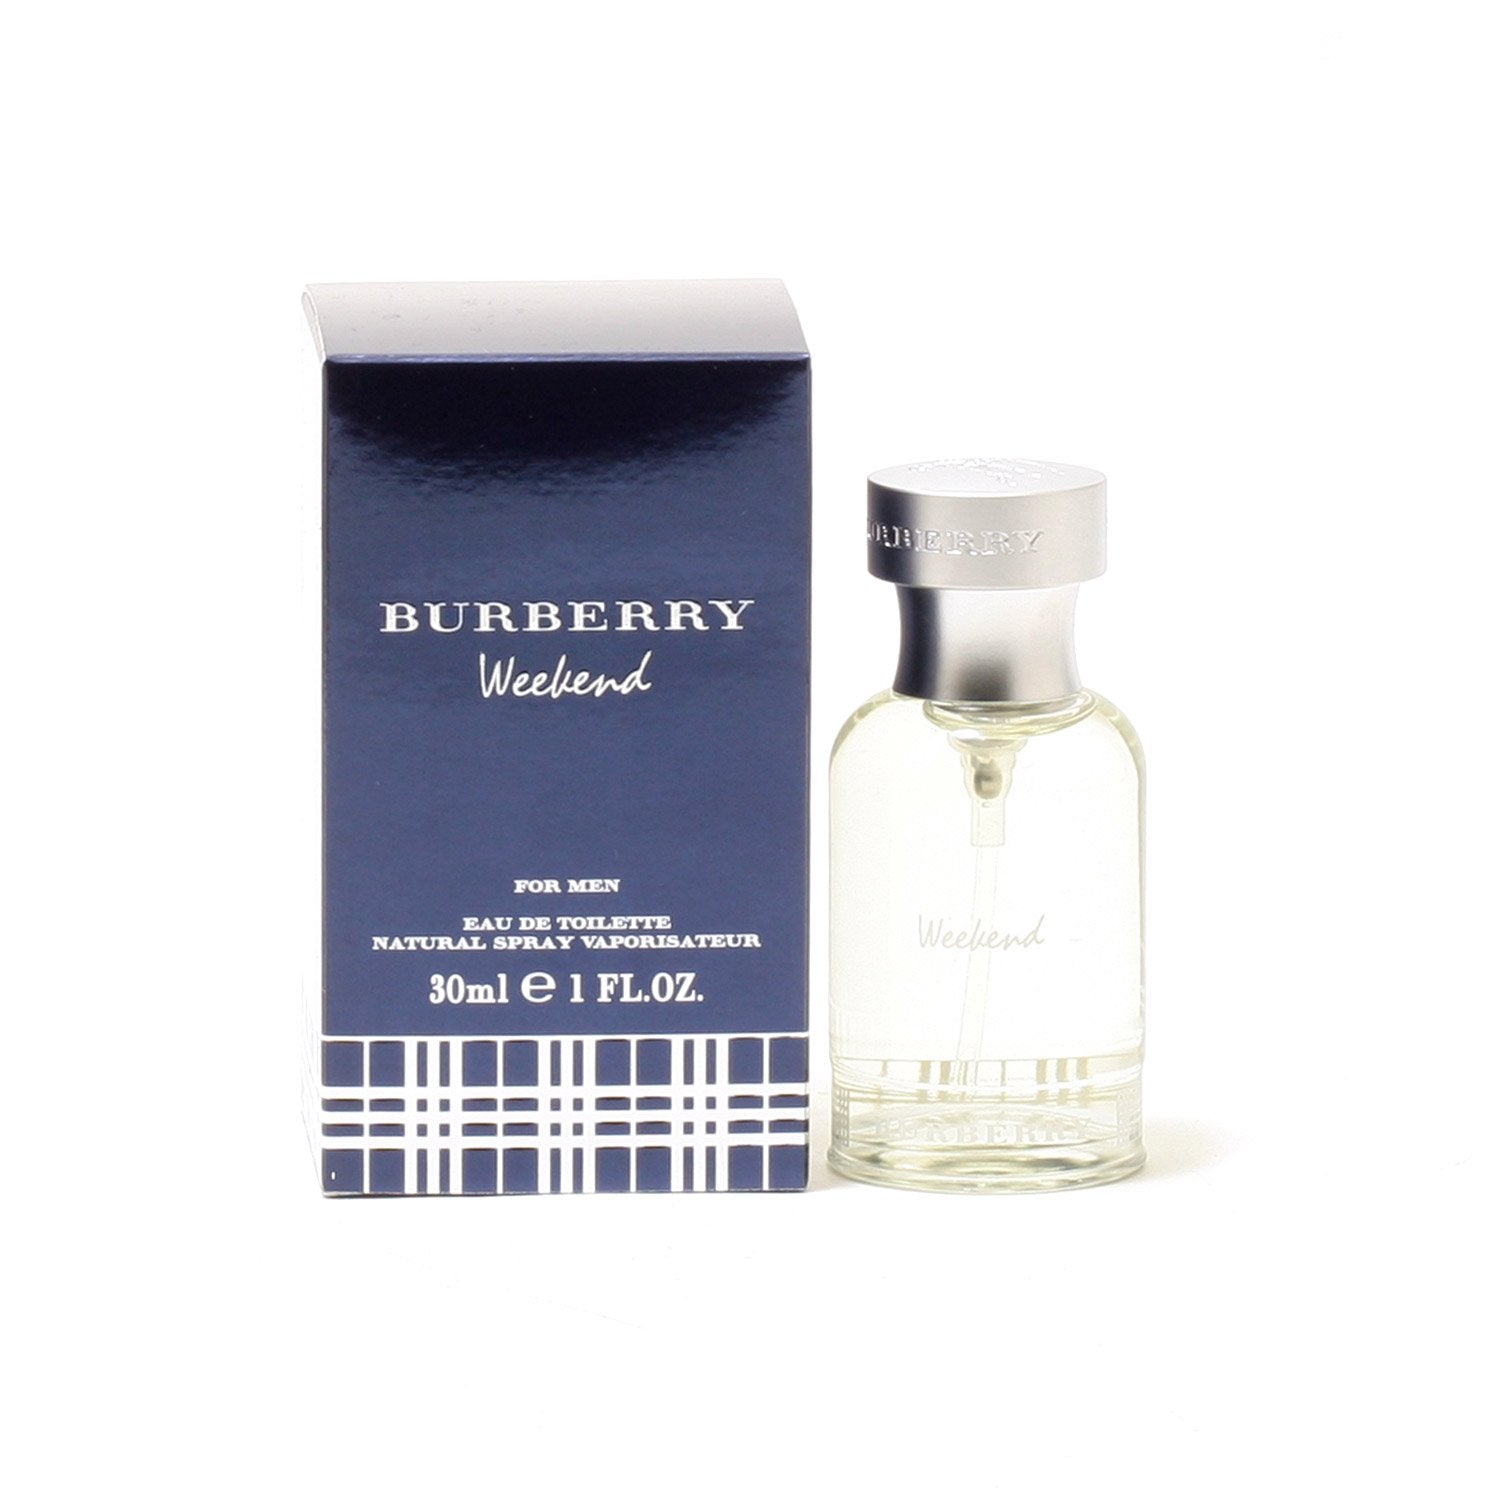 TOILETTE BURBERRY - Room SPRAY – WEEKEND EAU FOR Fragrance DE MEN